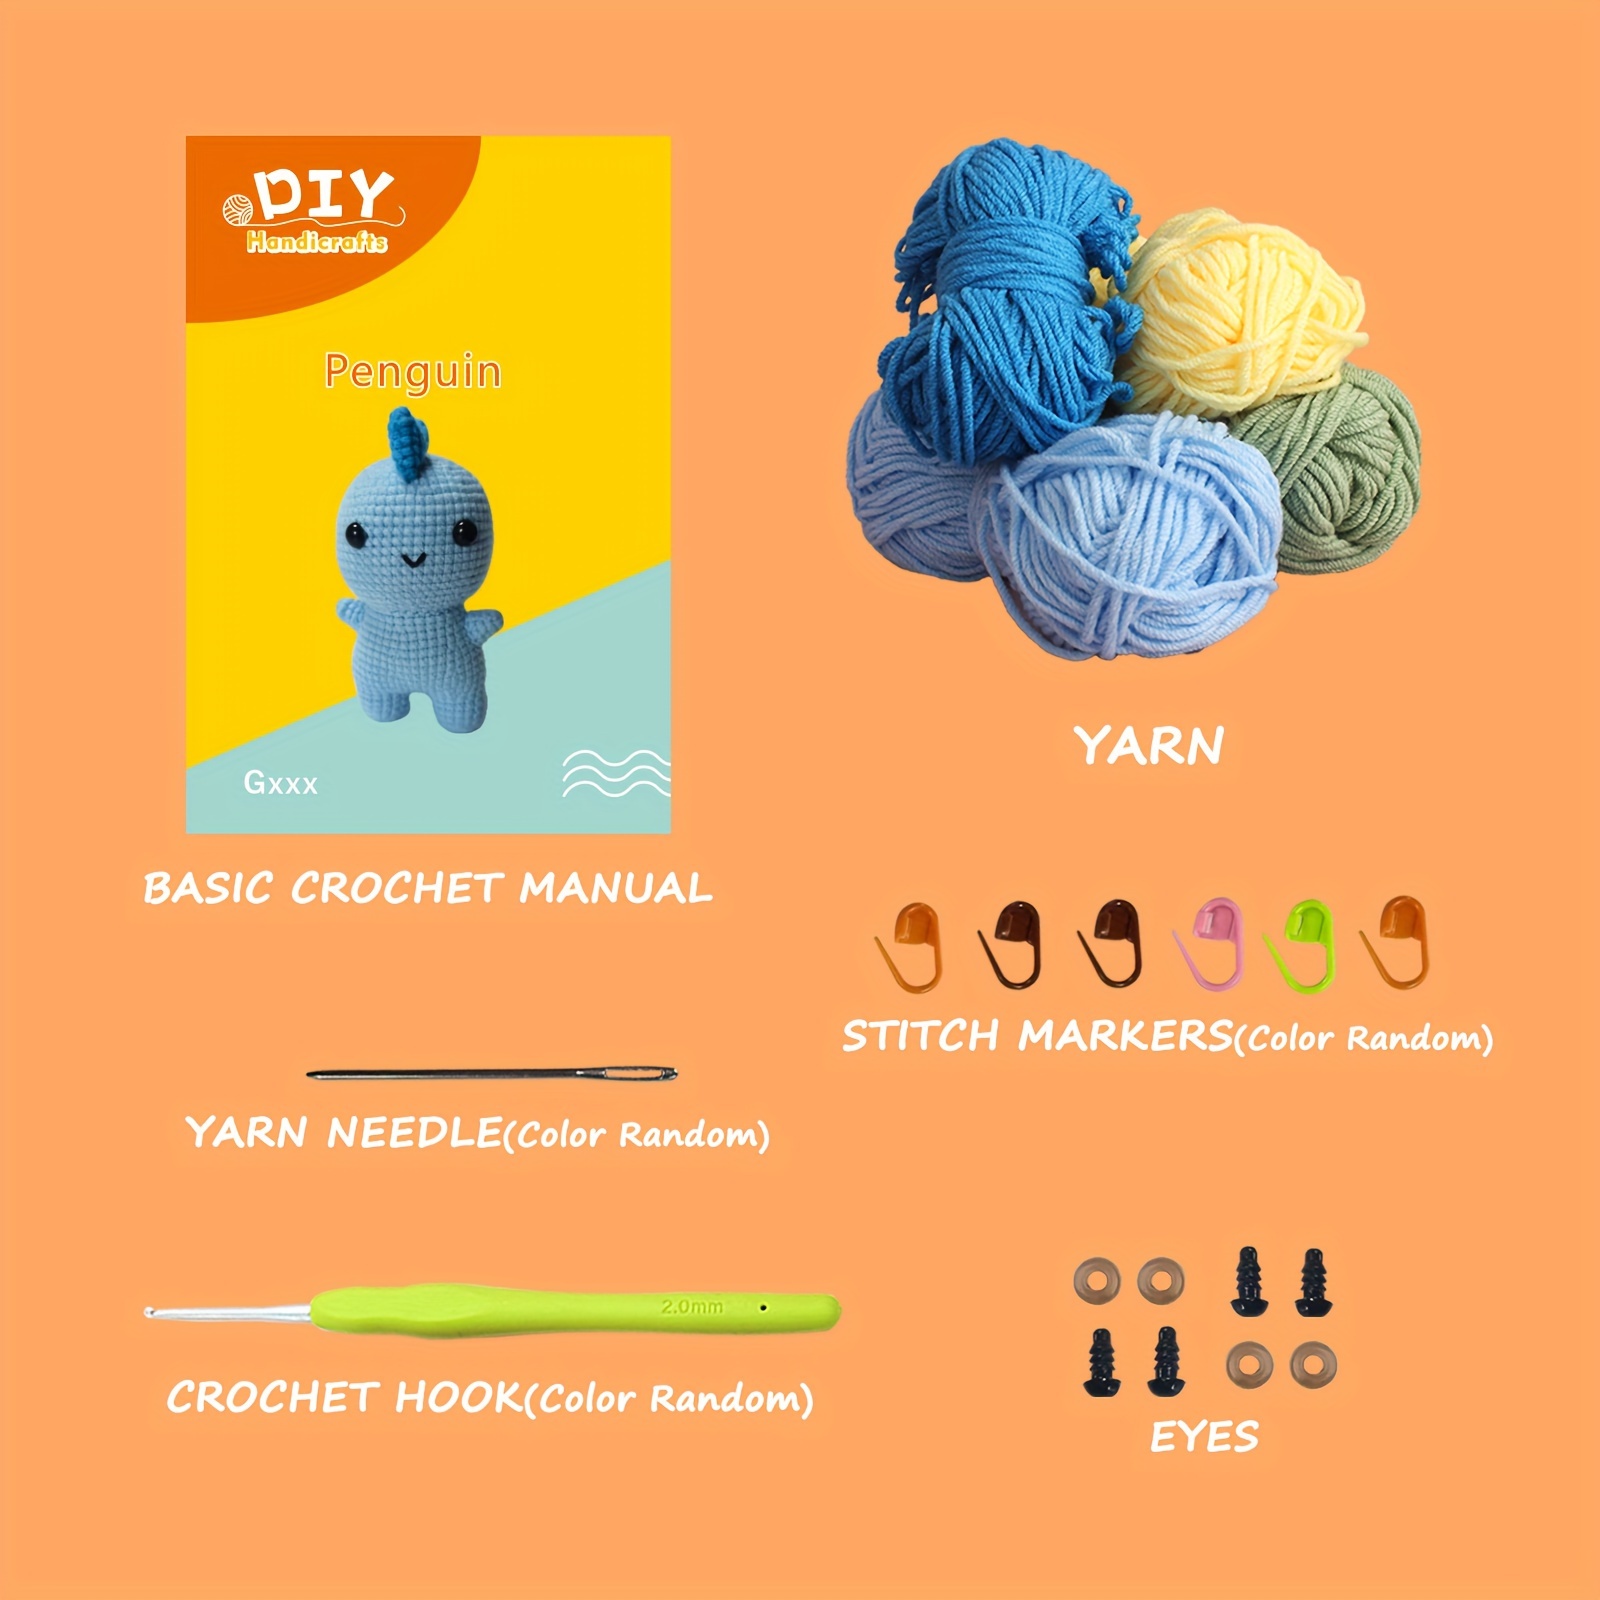 Beginners Crochet Kit, Dinosaur Doll DIY Crochet Animal Kit, Complete  Knitting Kit with Yarn, Step-by-Step Instruction Video for Beginners,  Crochet